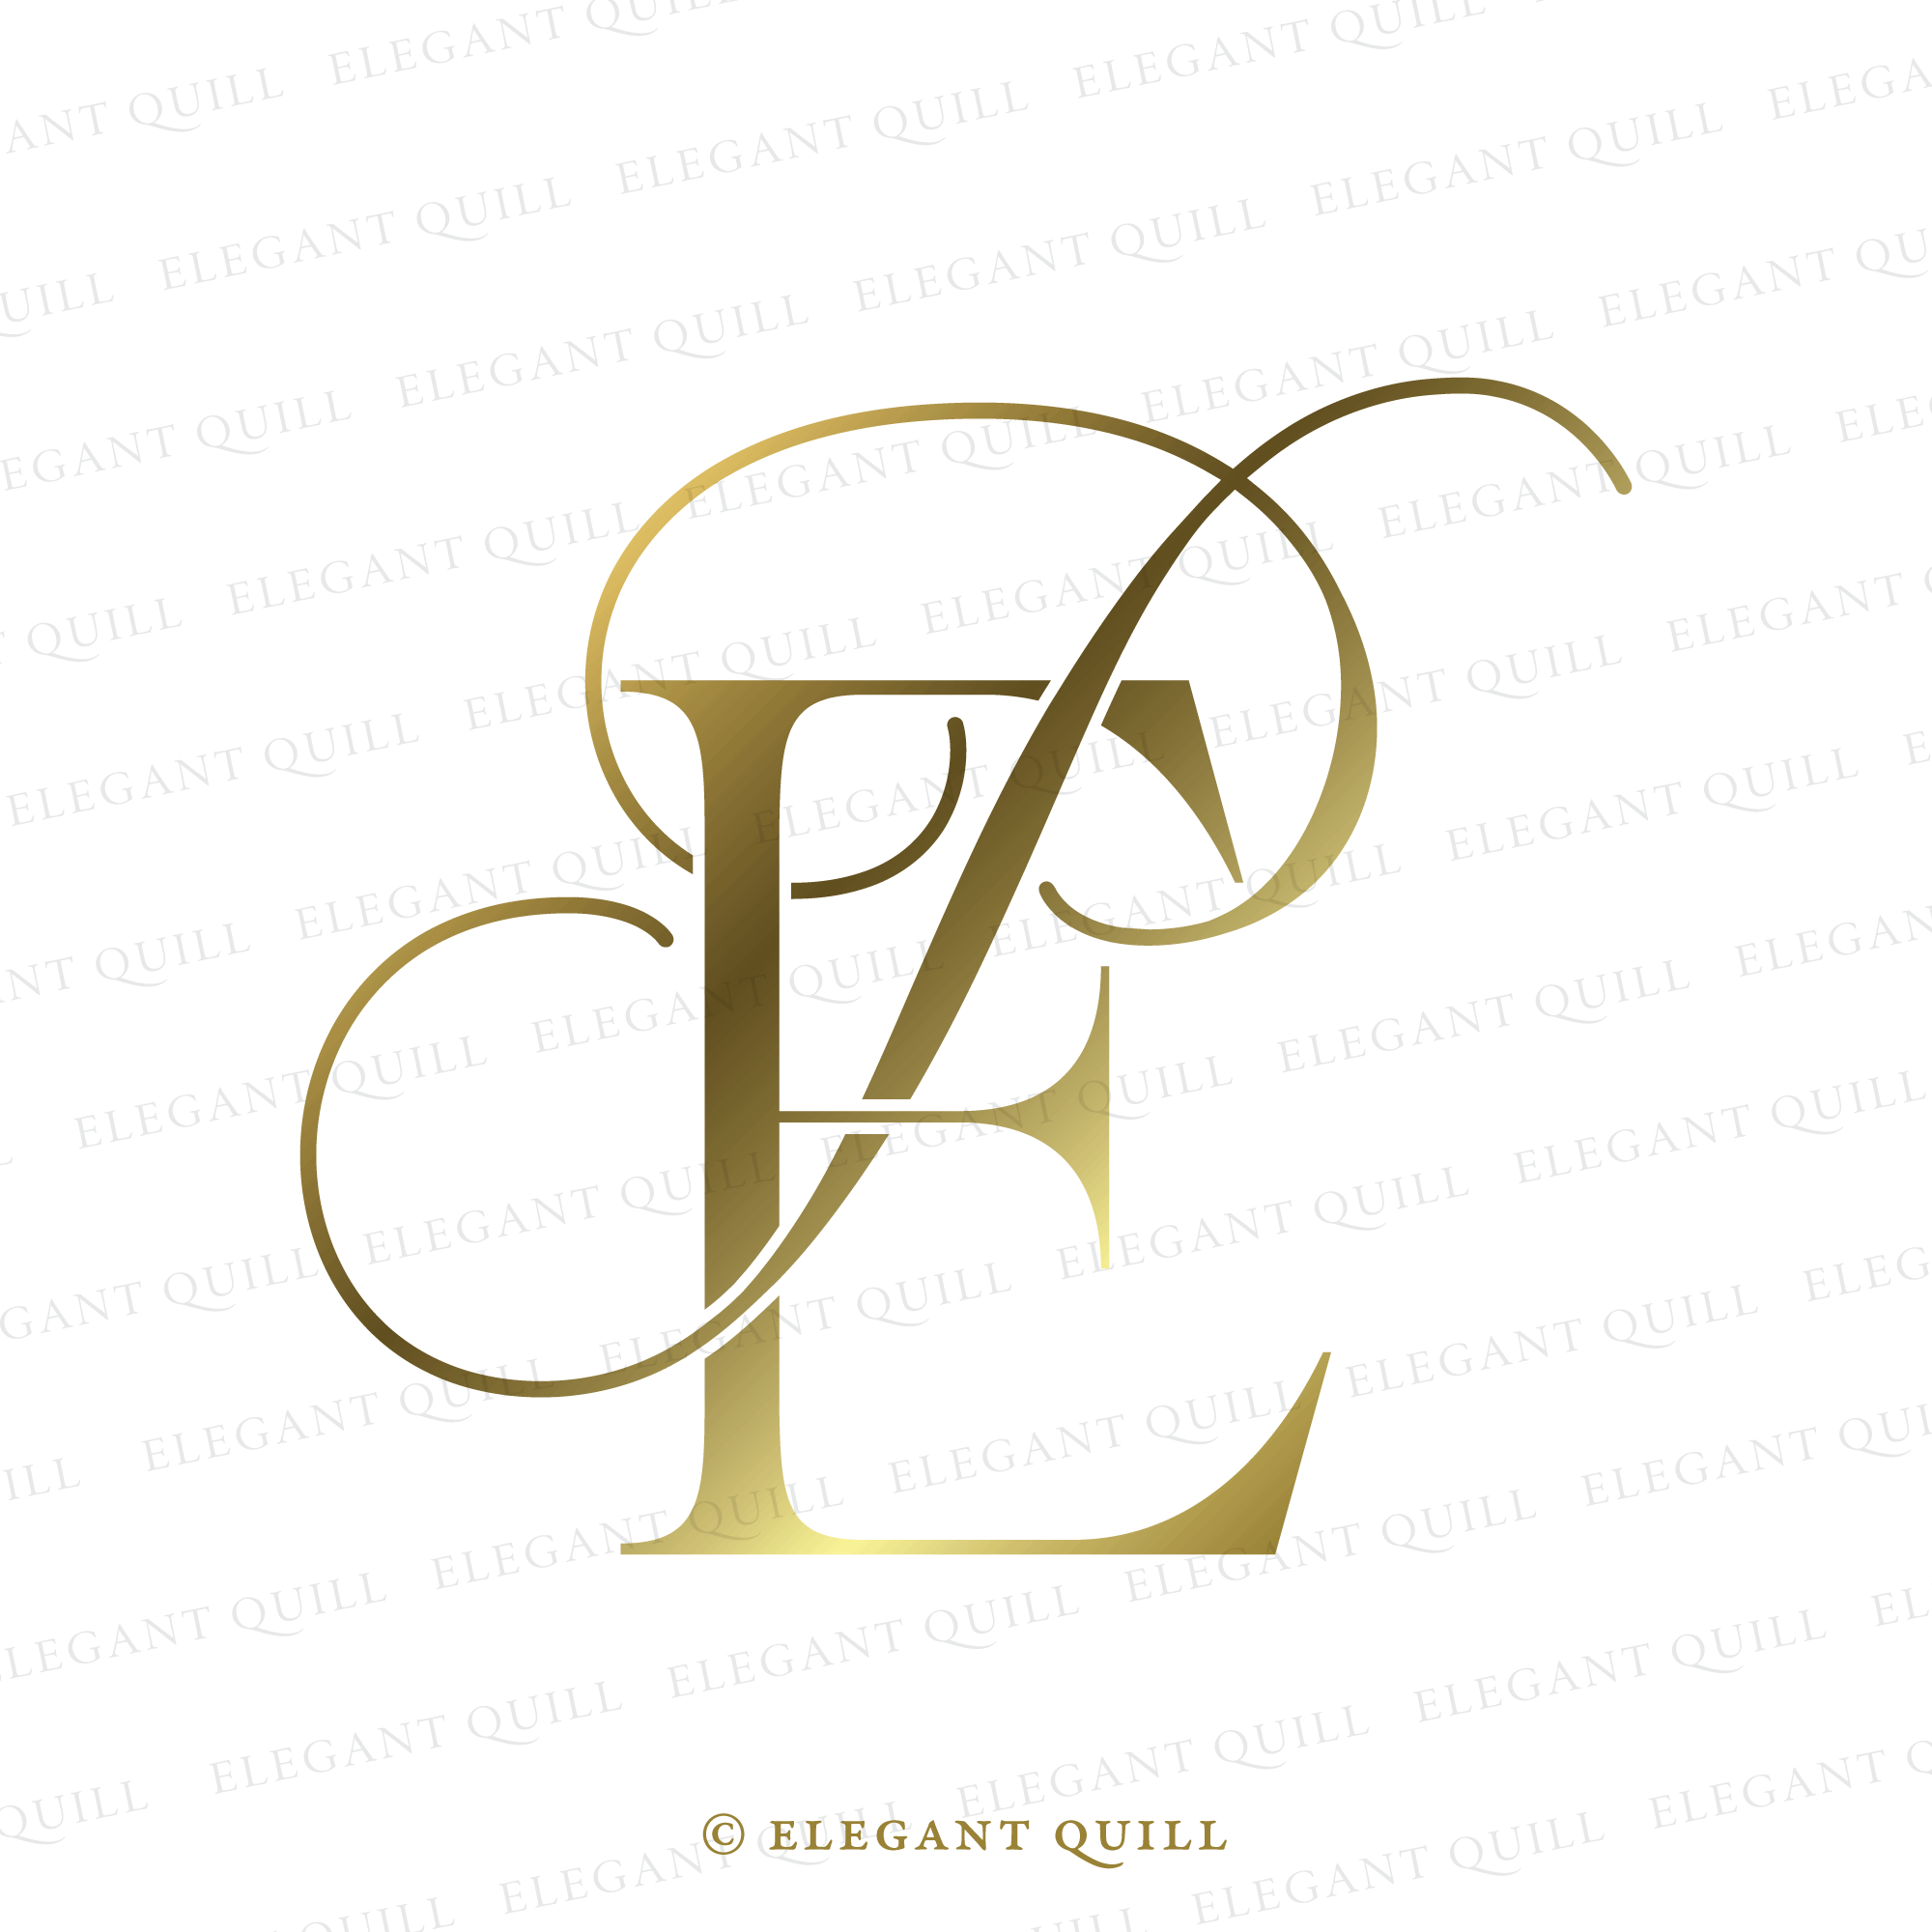 Pe modern letter logo design with swoosh Vector Image